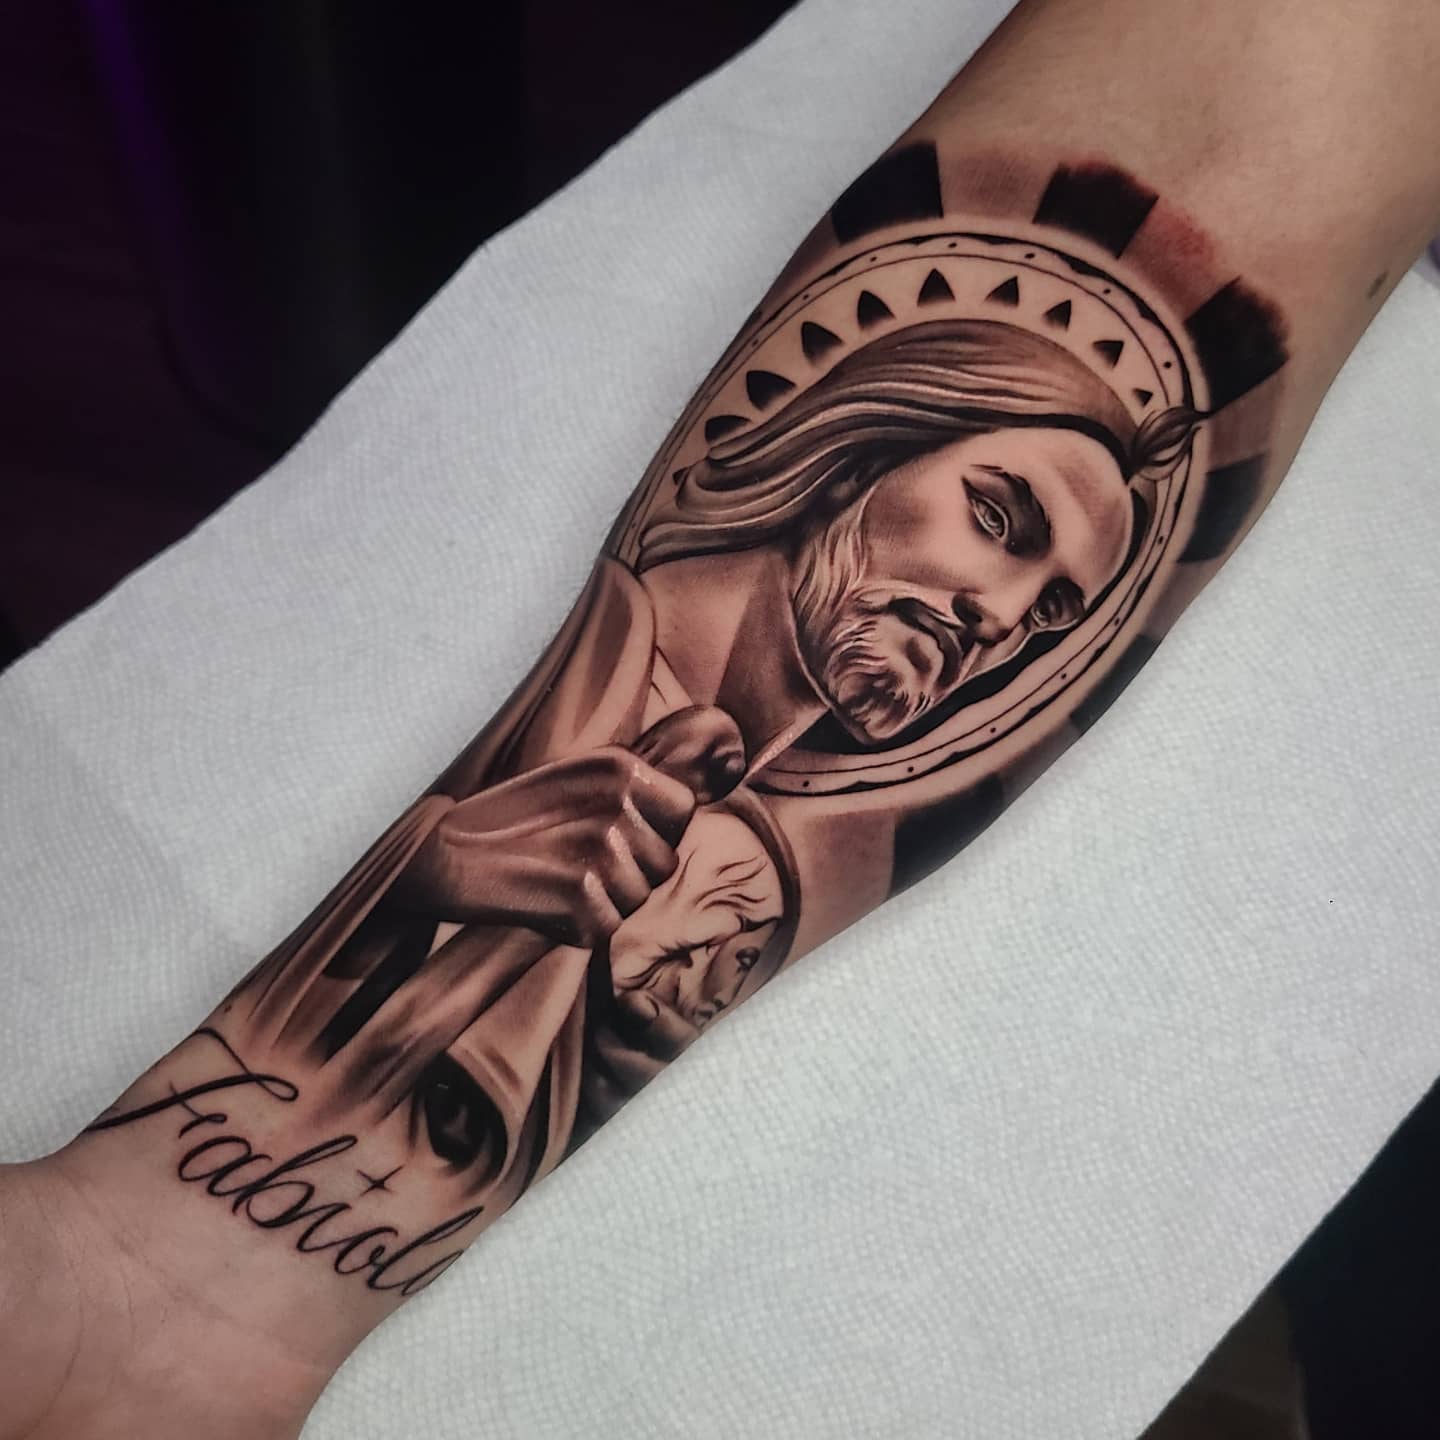 ICONIQ IMAGE  Whos next San Judas Tadeo statue    tattoo  sanjudastattoo sanjudastadeo sanjudastadeotattoo blackandgrey   Instagram